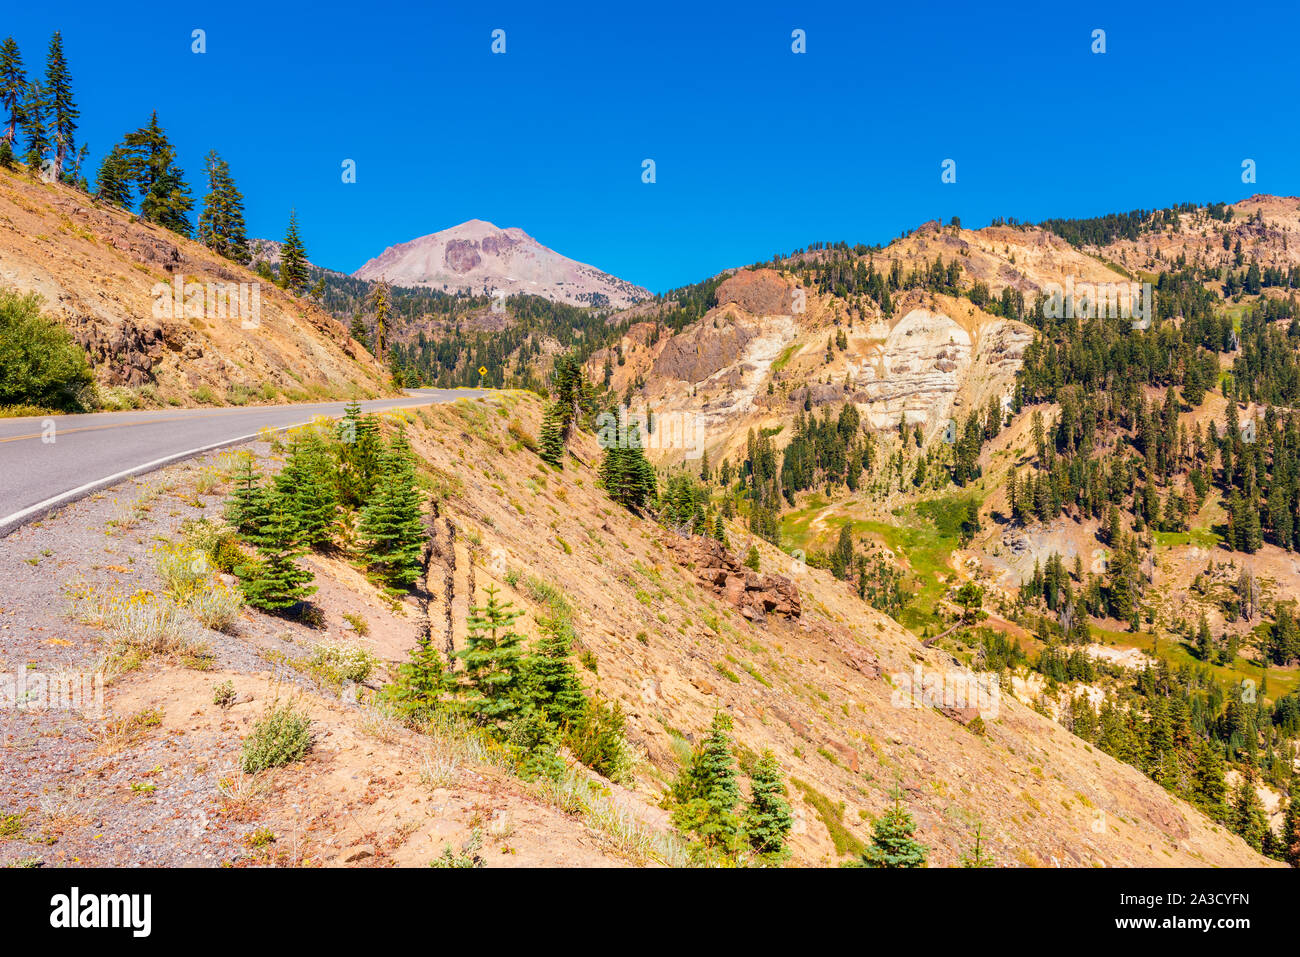 Road in Lassen Volcanic National Park, California, USA. Stock Photo